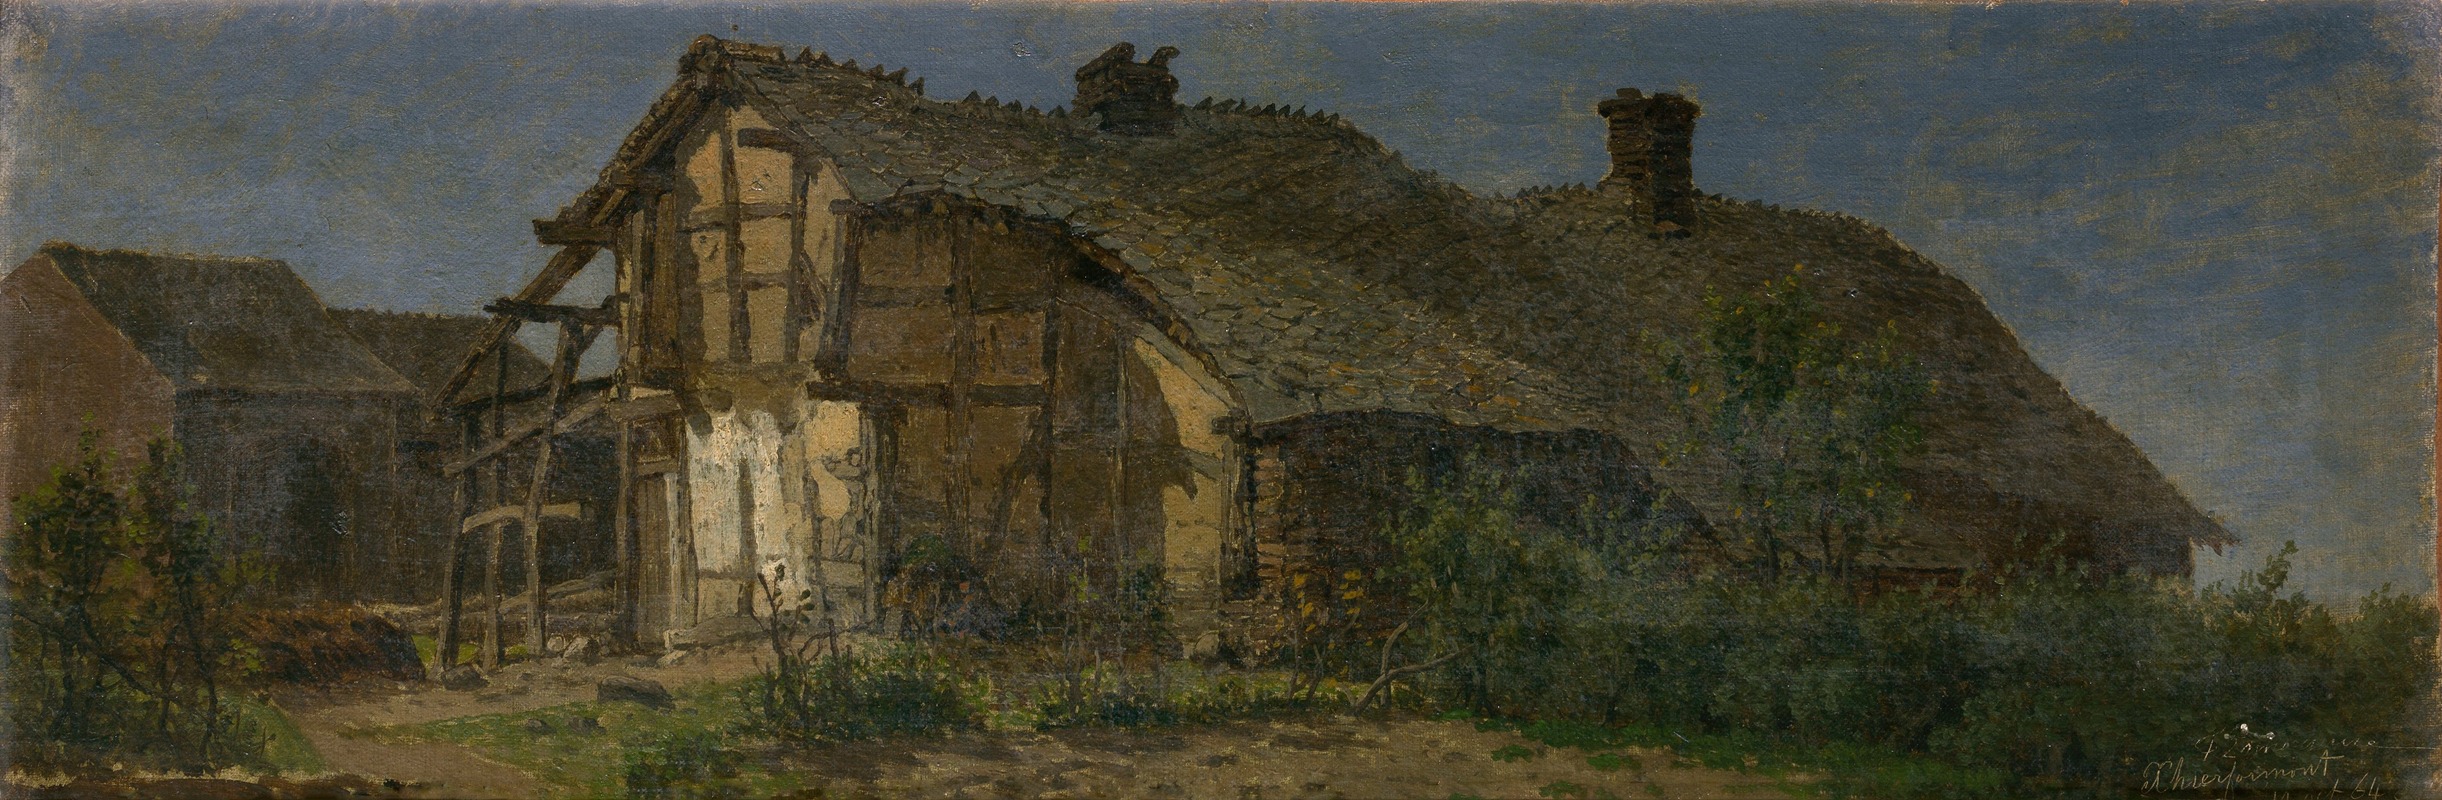 Jean Pierre François Lamorinière - An Old Farm in Xhierformont